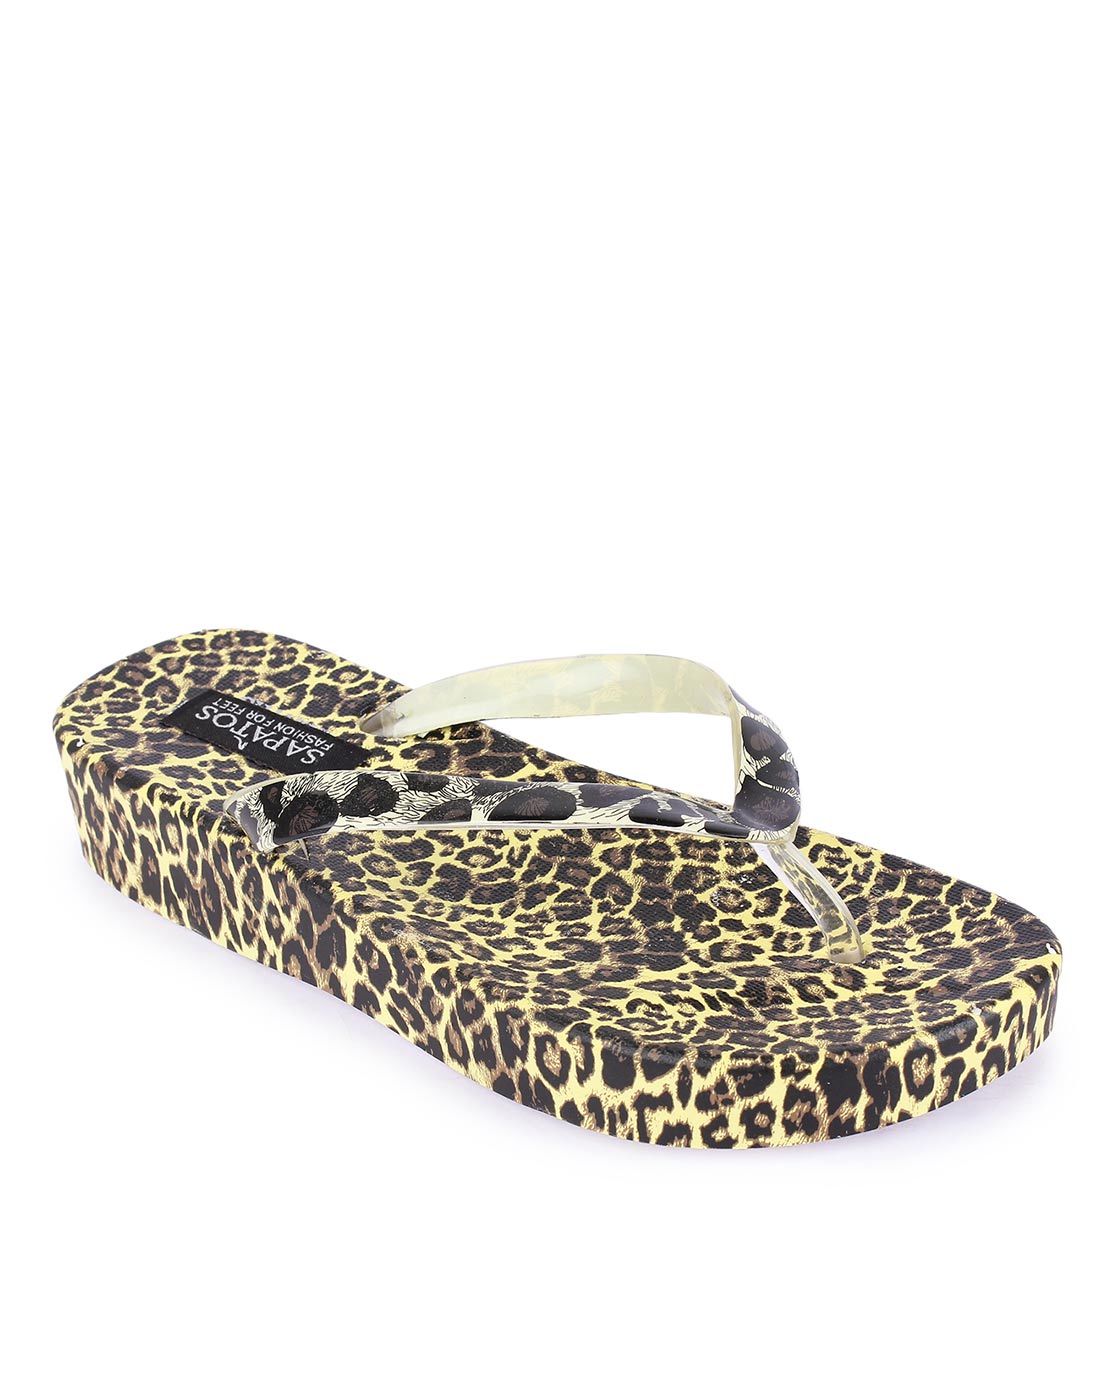 leopard print flip flops